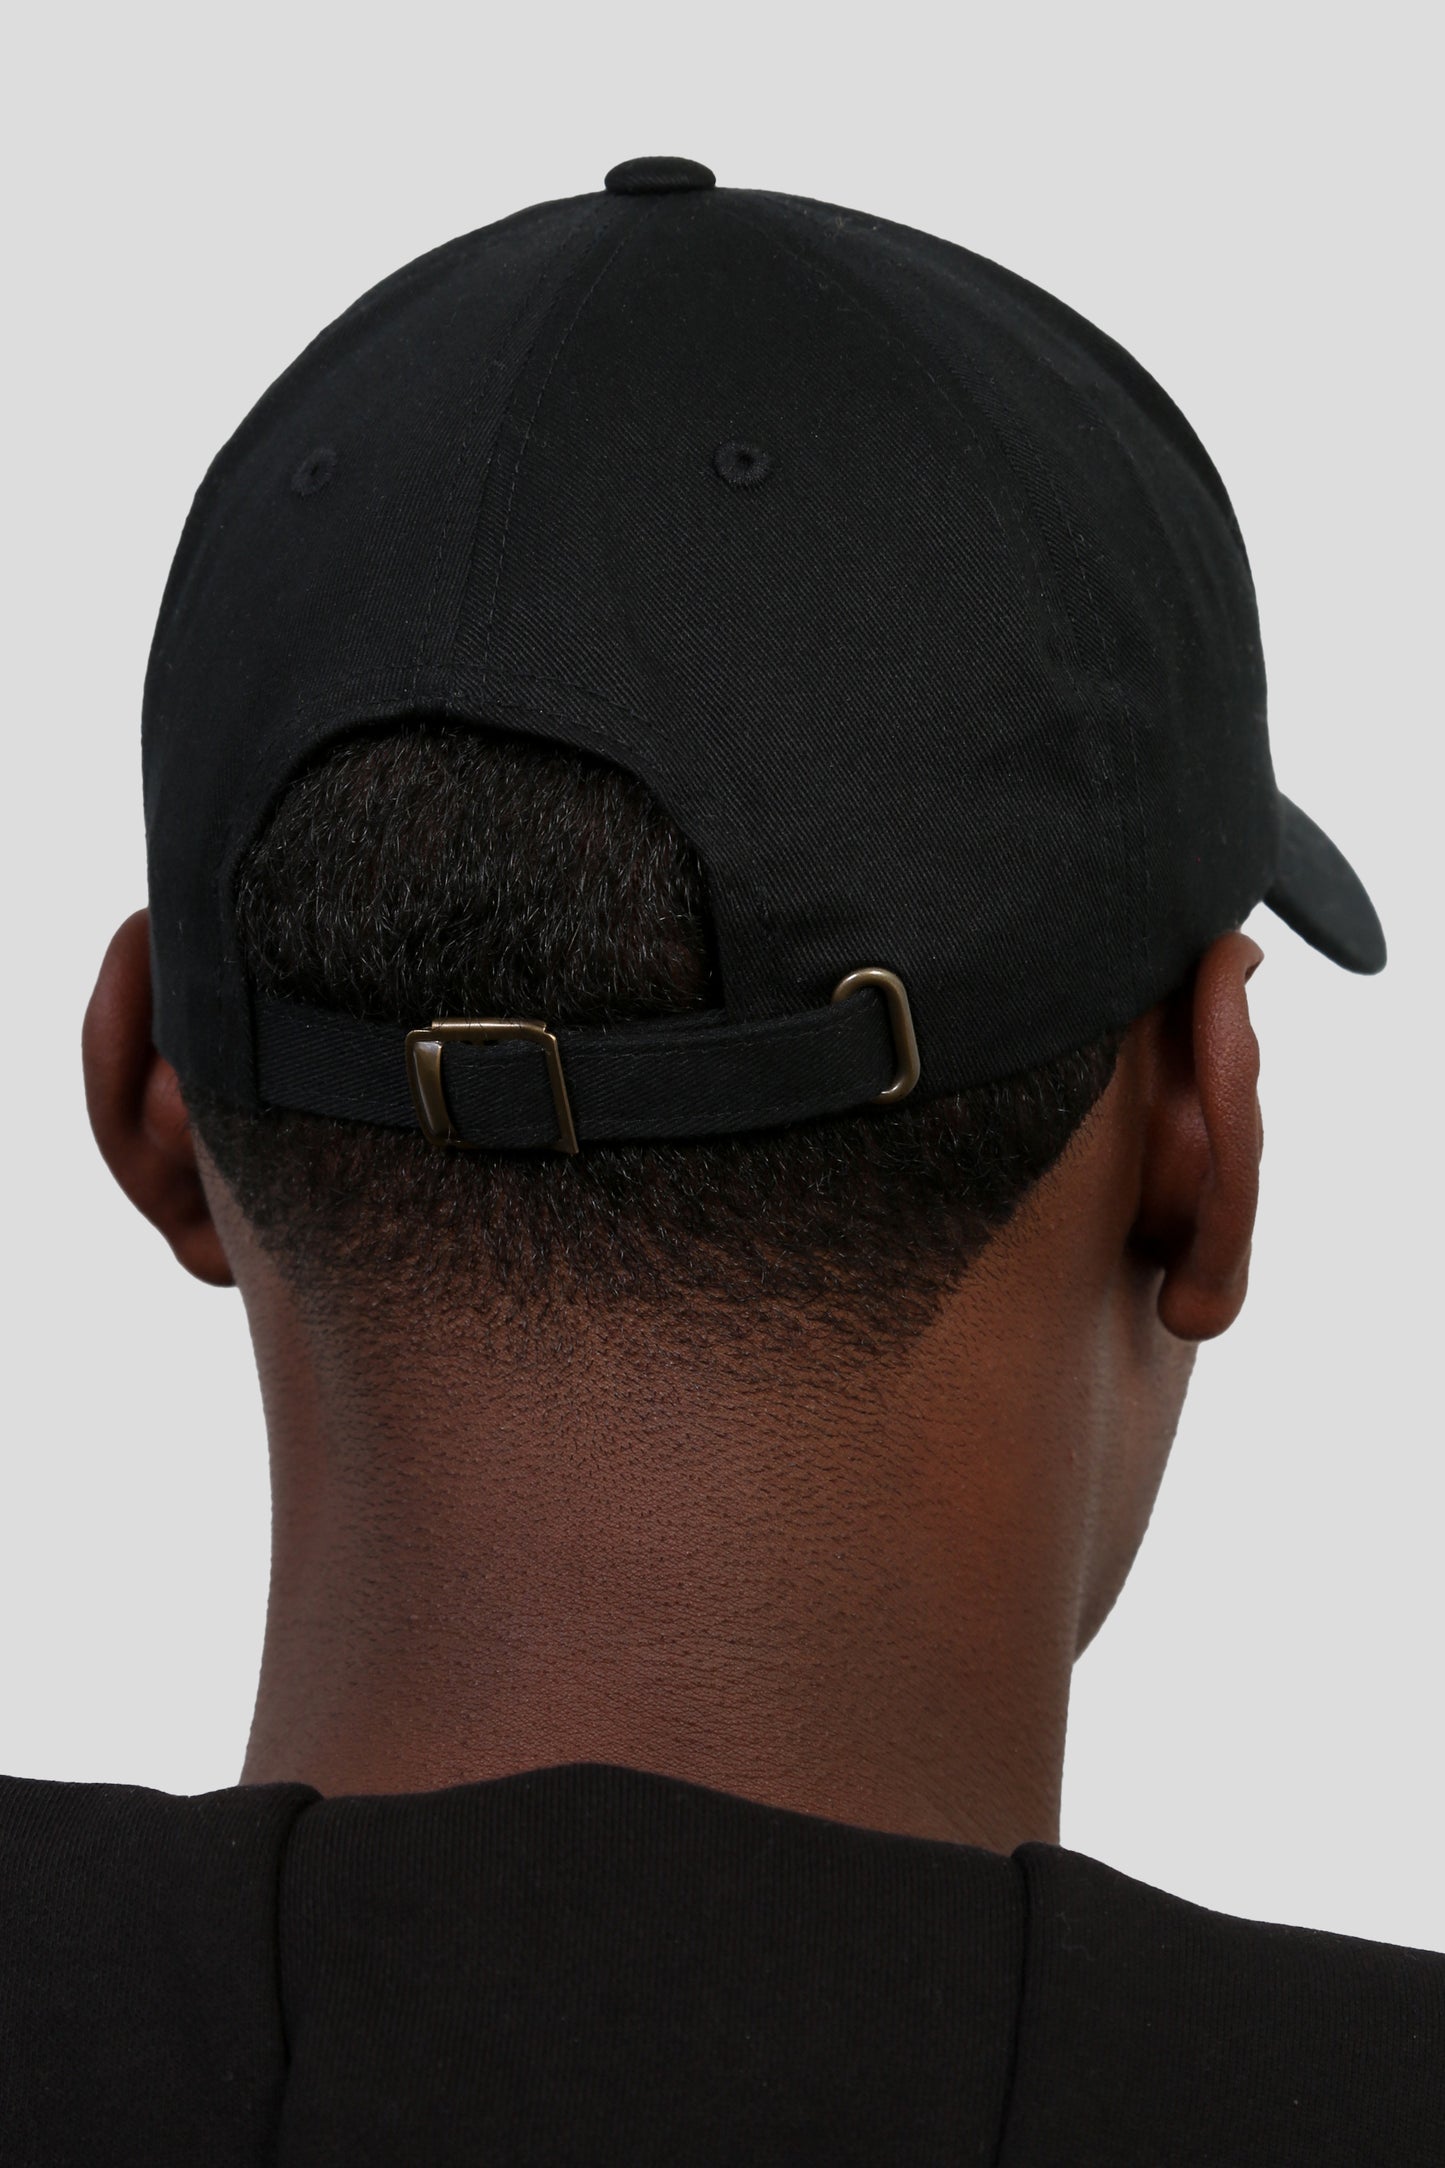 www.ninetyninestudios.de| NINETYNINE CAP BLACK| Kappe | €24.99 | Revolutionary Islamic Streetwear | 99Studios